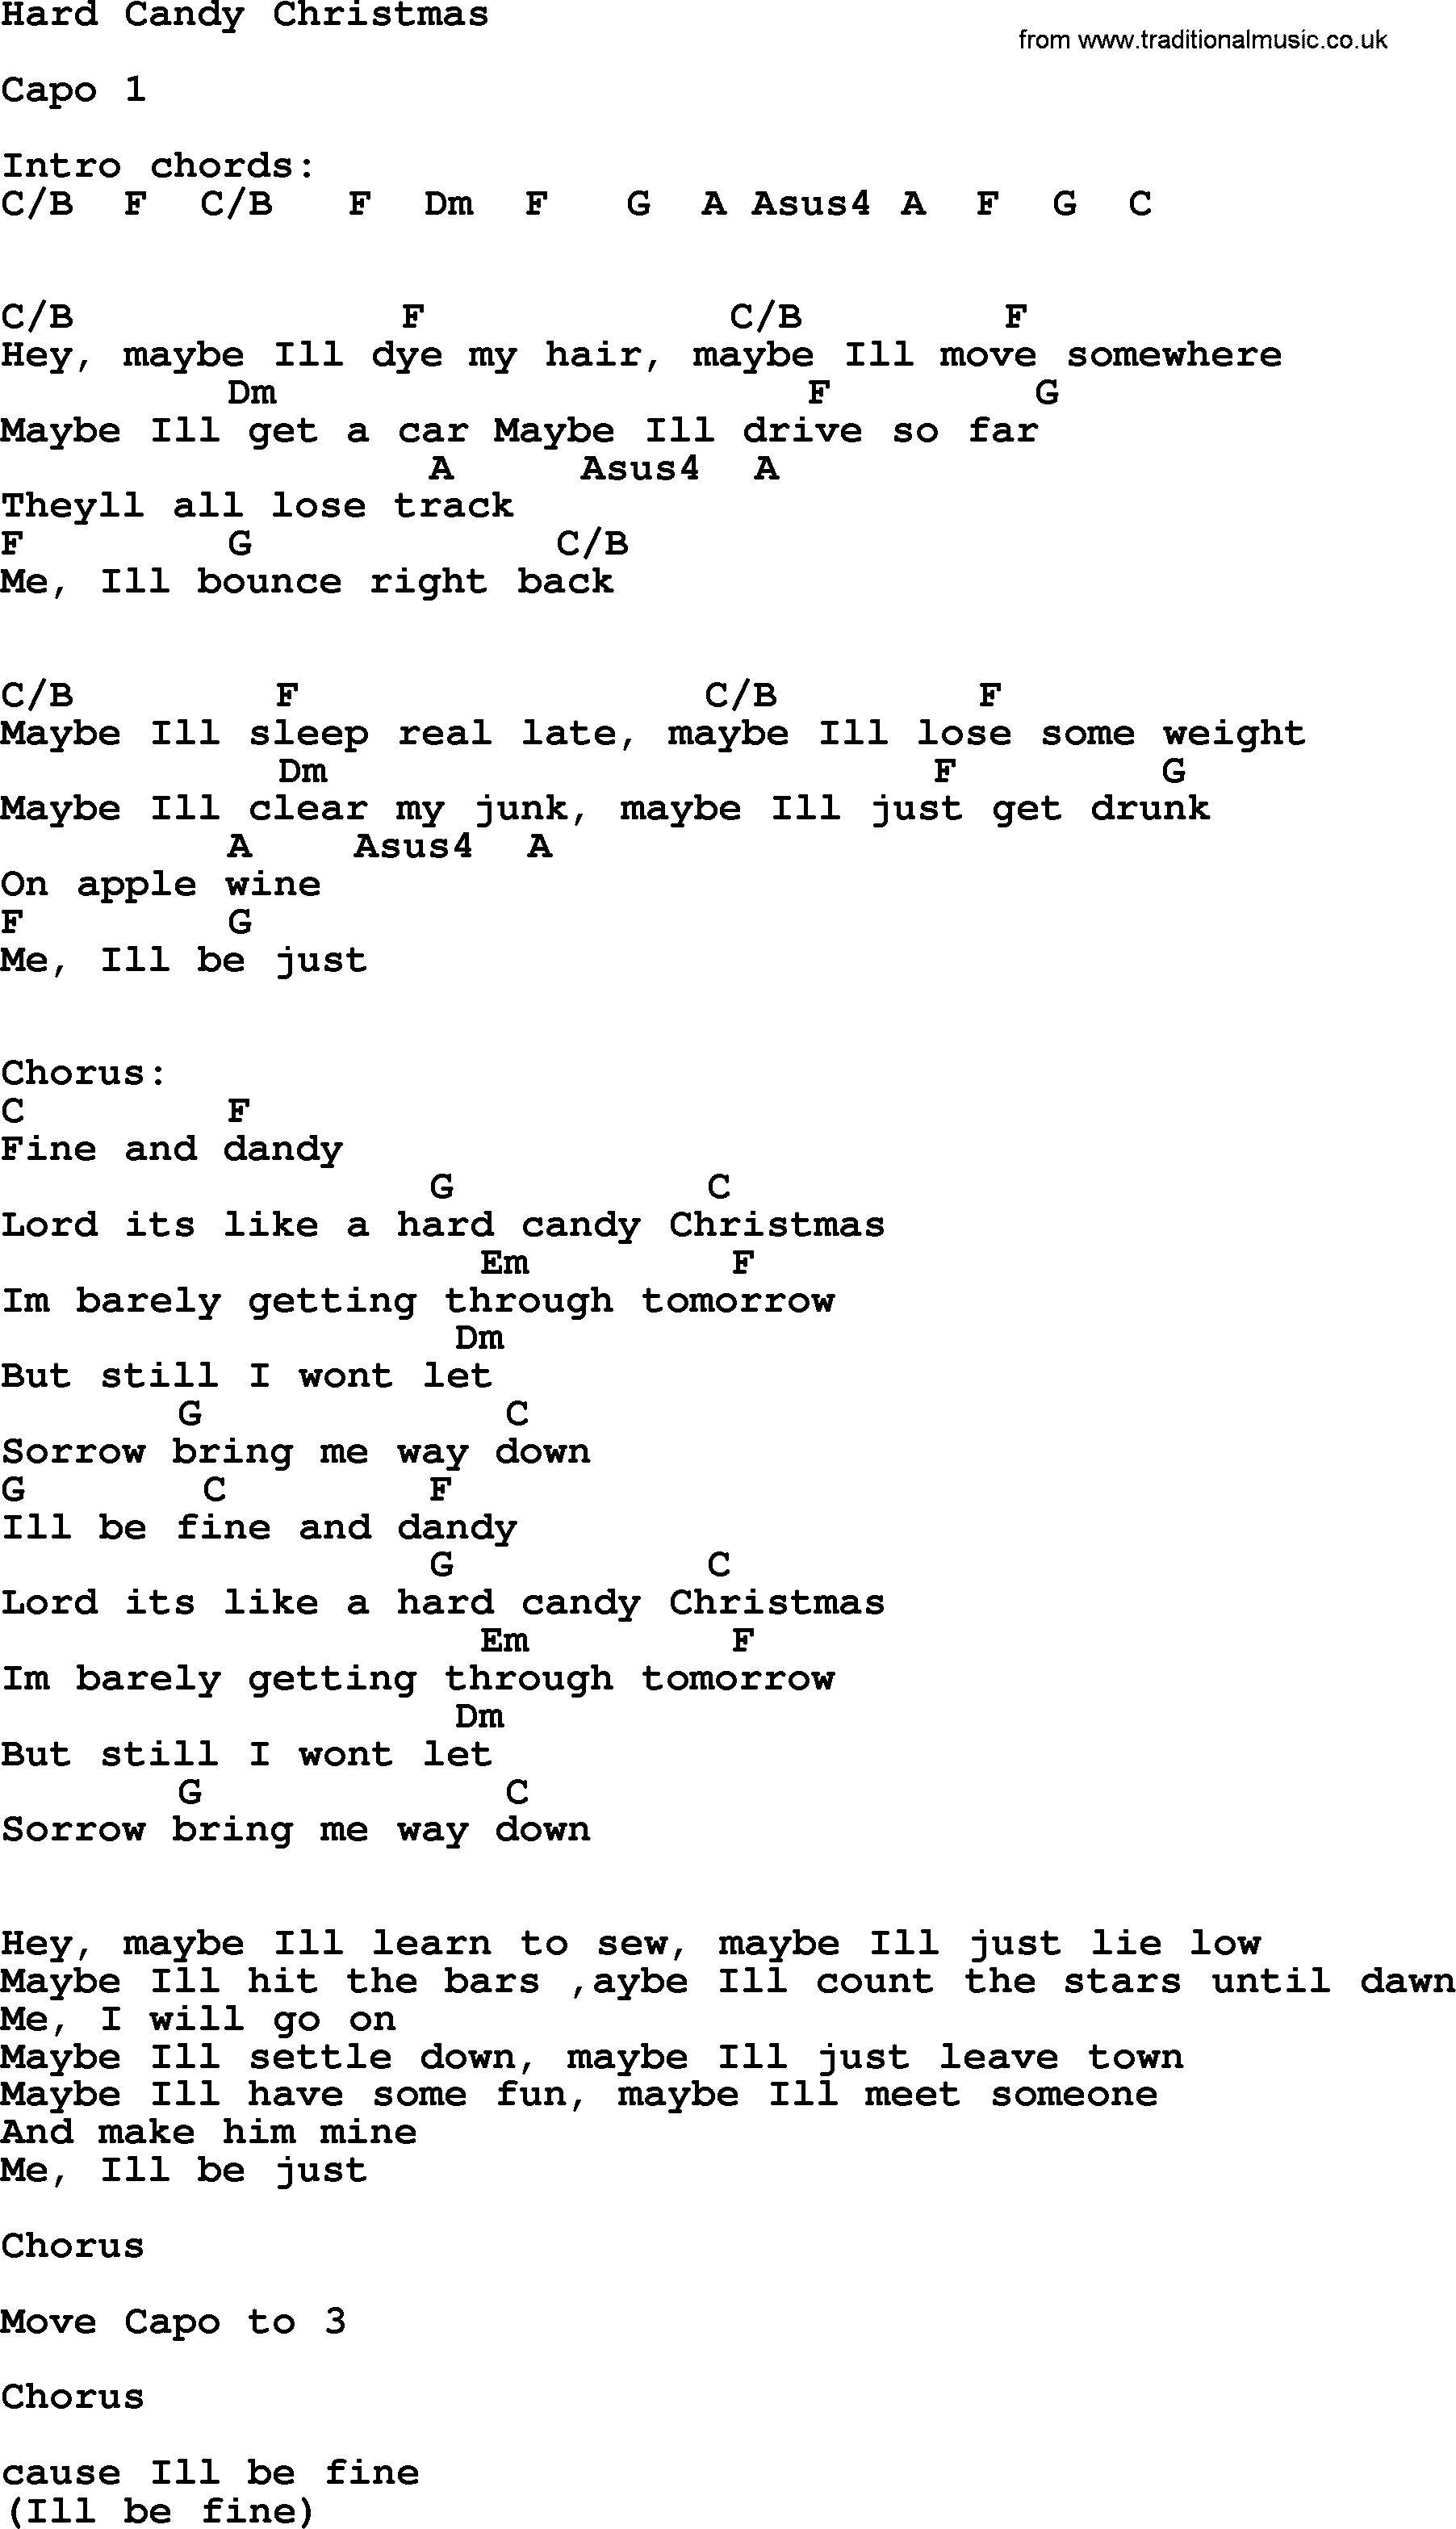 Hard Candy Christmas Chords
 Dolly Parton song Hard Candy Christmas lyrics and chords